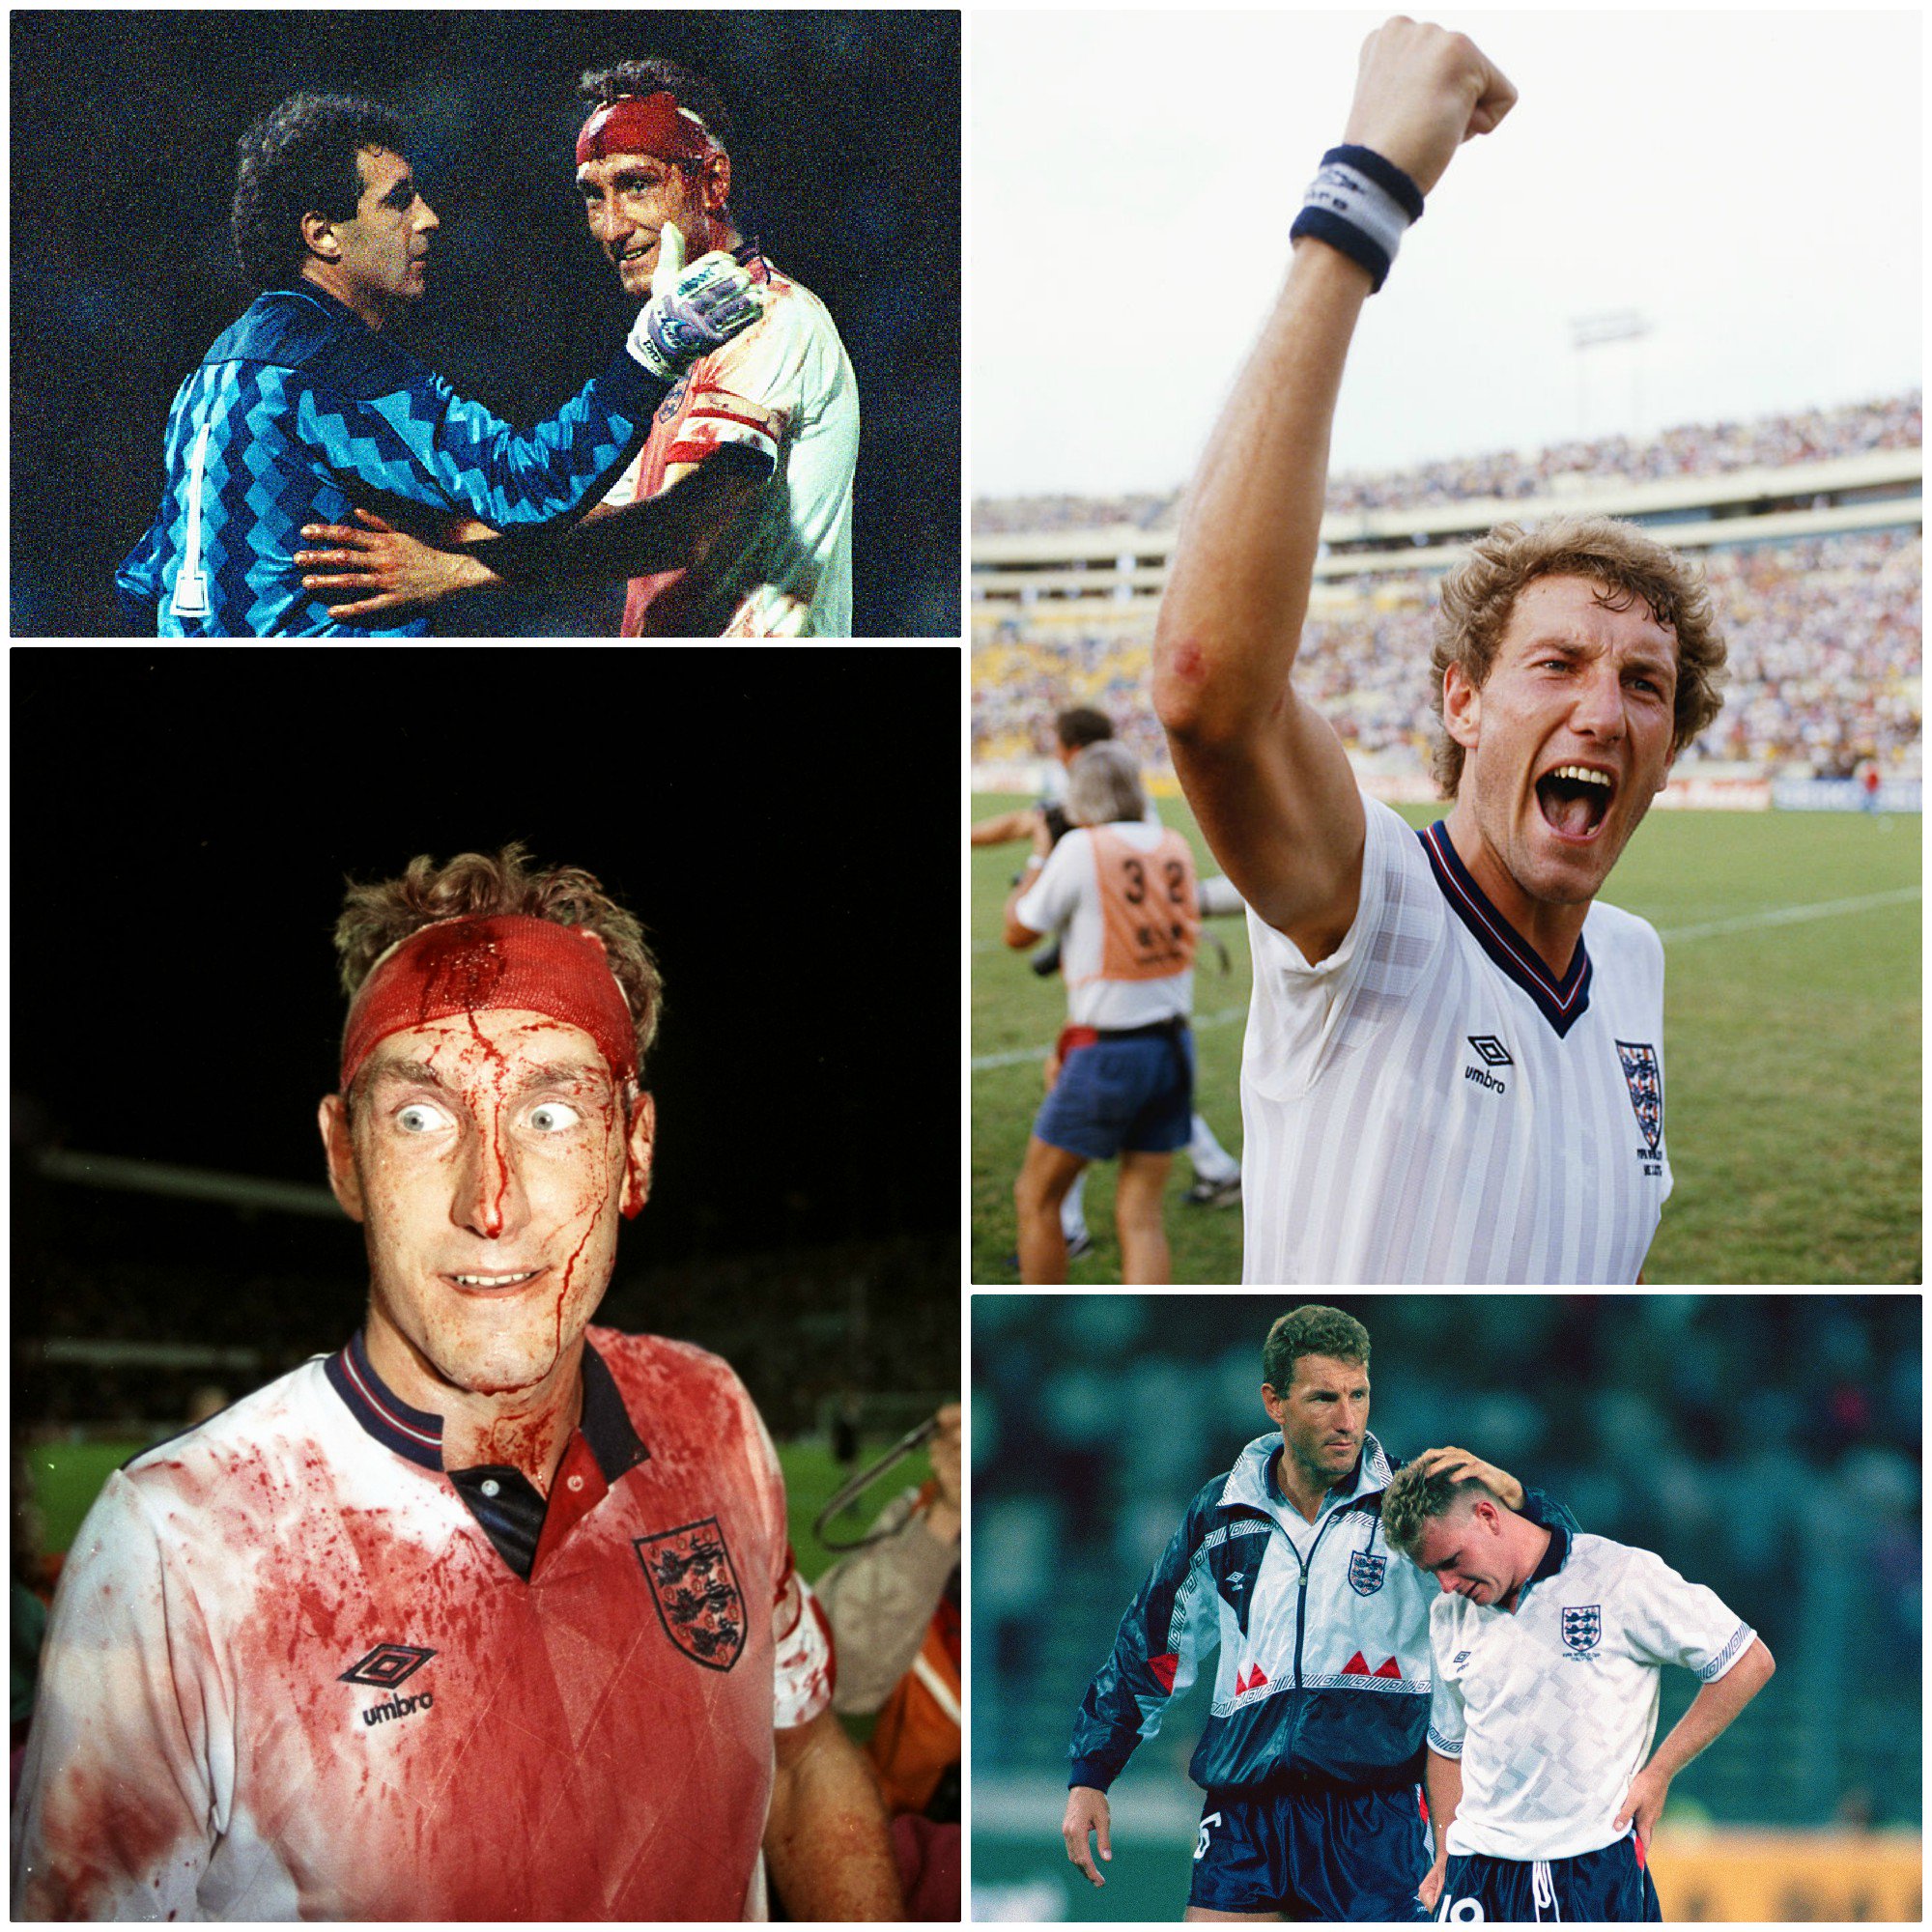 He bleeds England.

Happy birthday, Terry Butcher! 